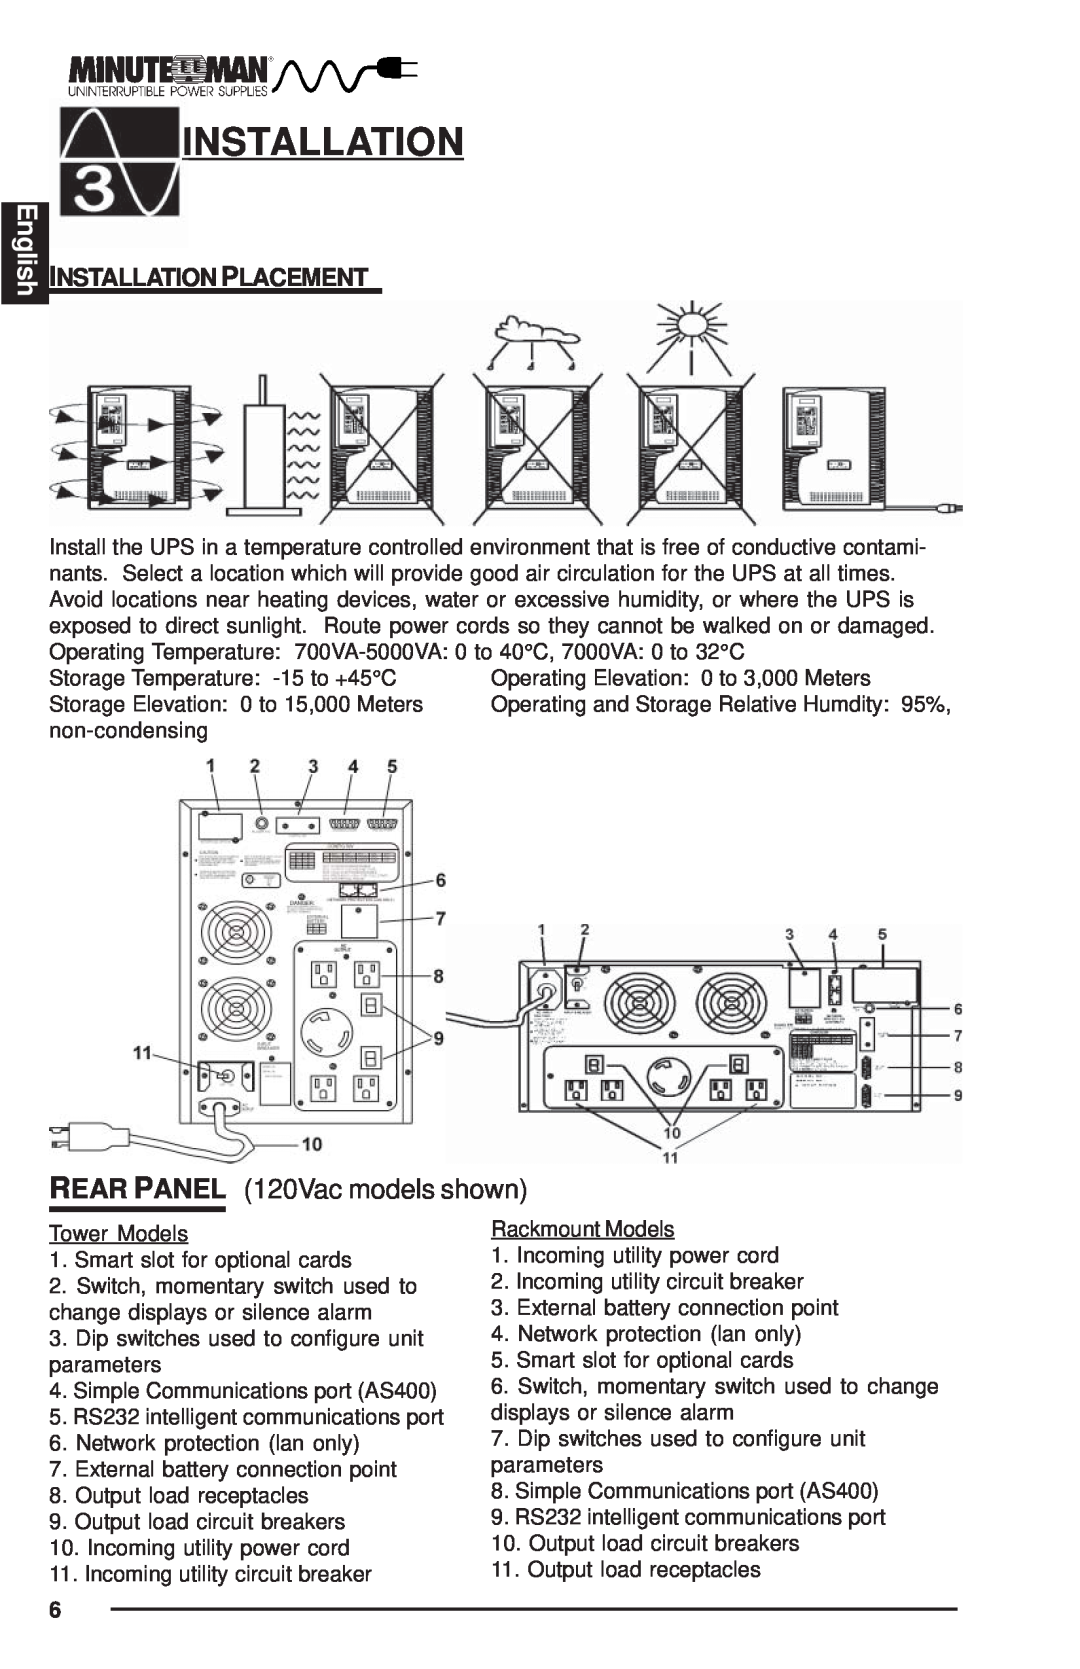 Minuteman UPS MCP-E user manual English, REAR PANEL 120Vac models shown, Installation Placement 